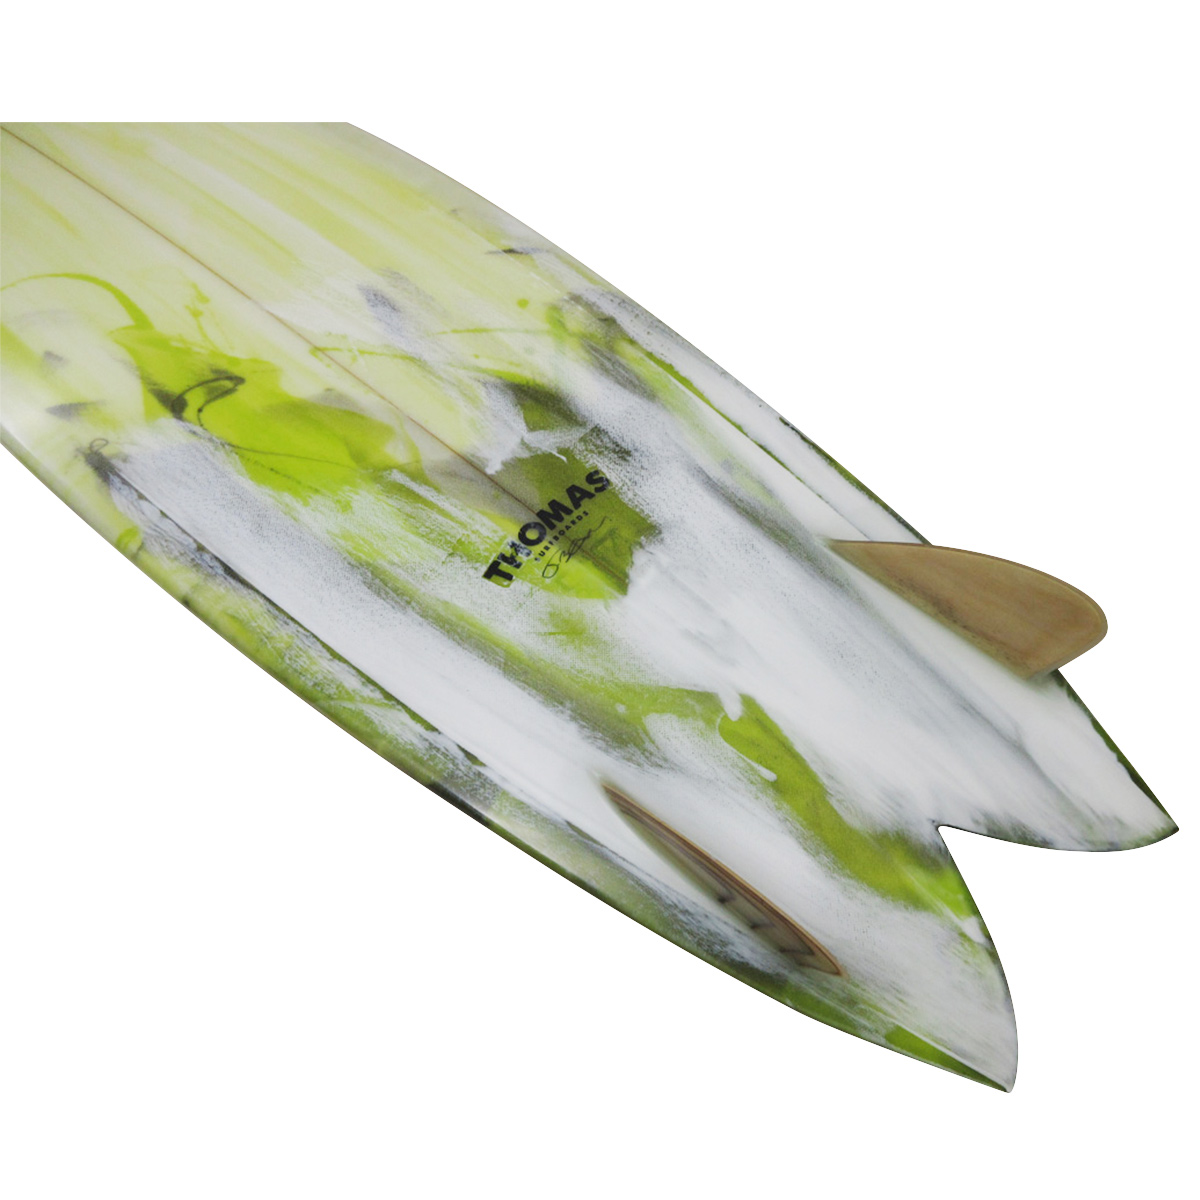 Thomas Surfboards / Keel Fish 5`10